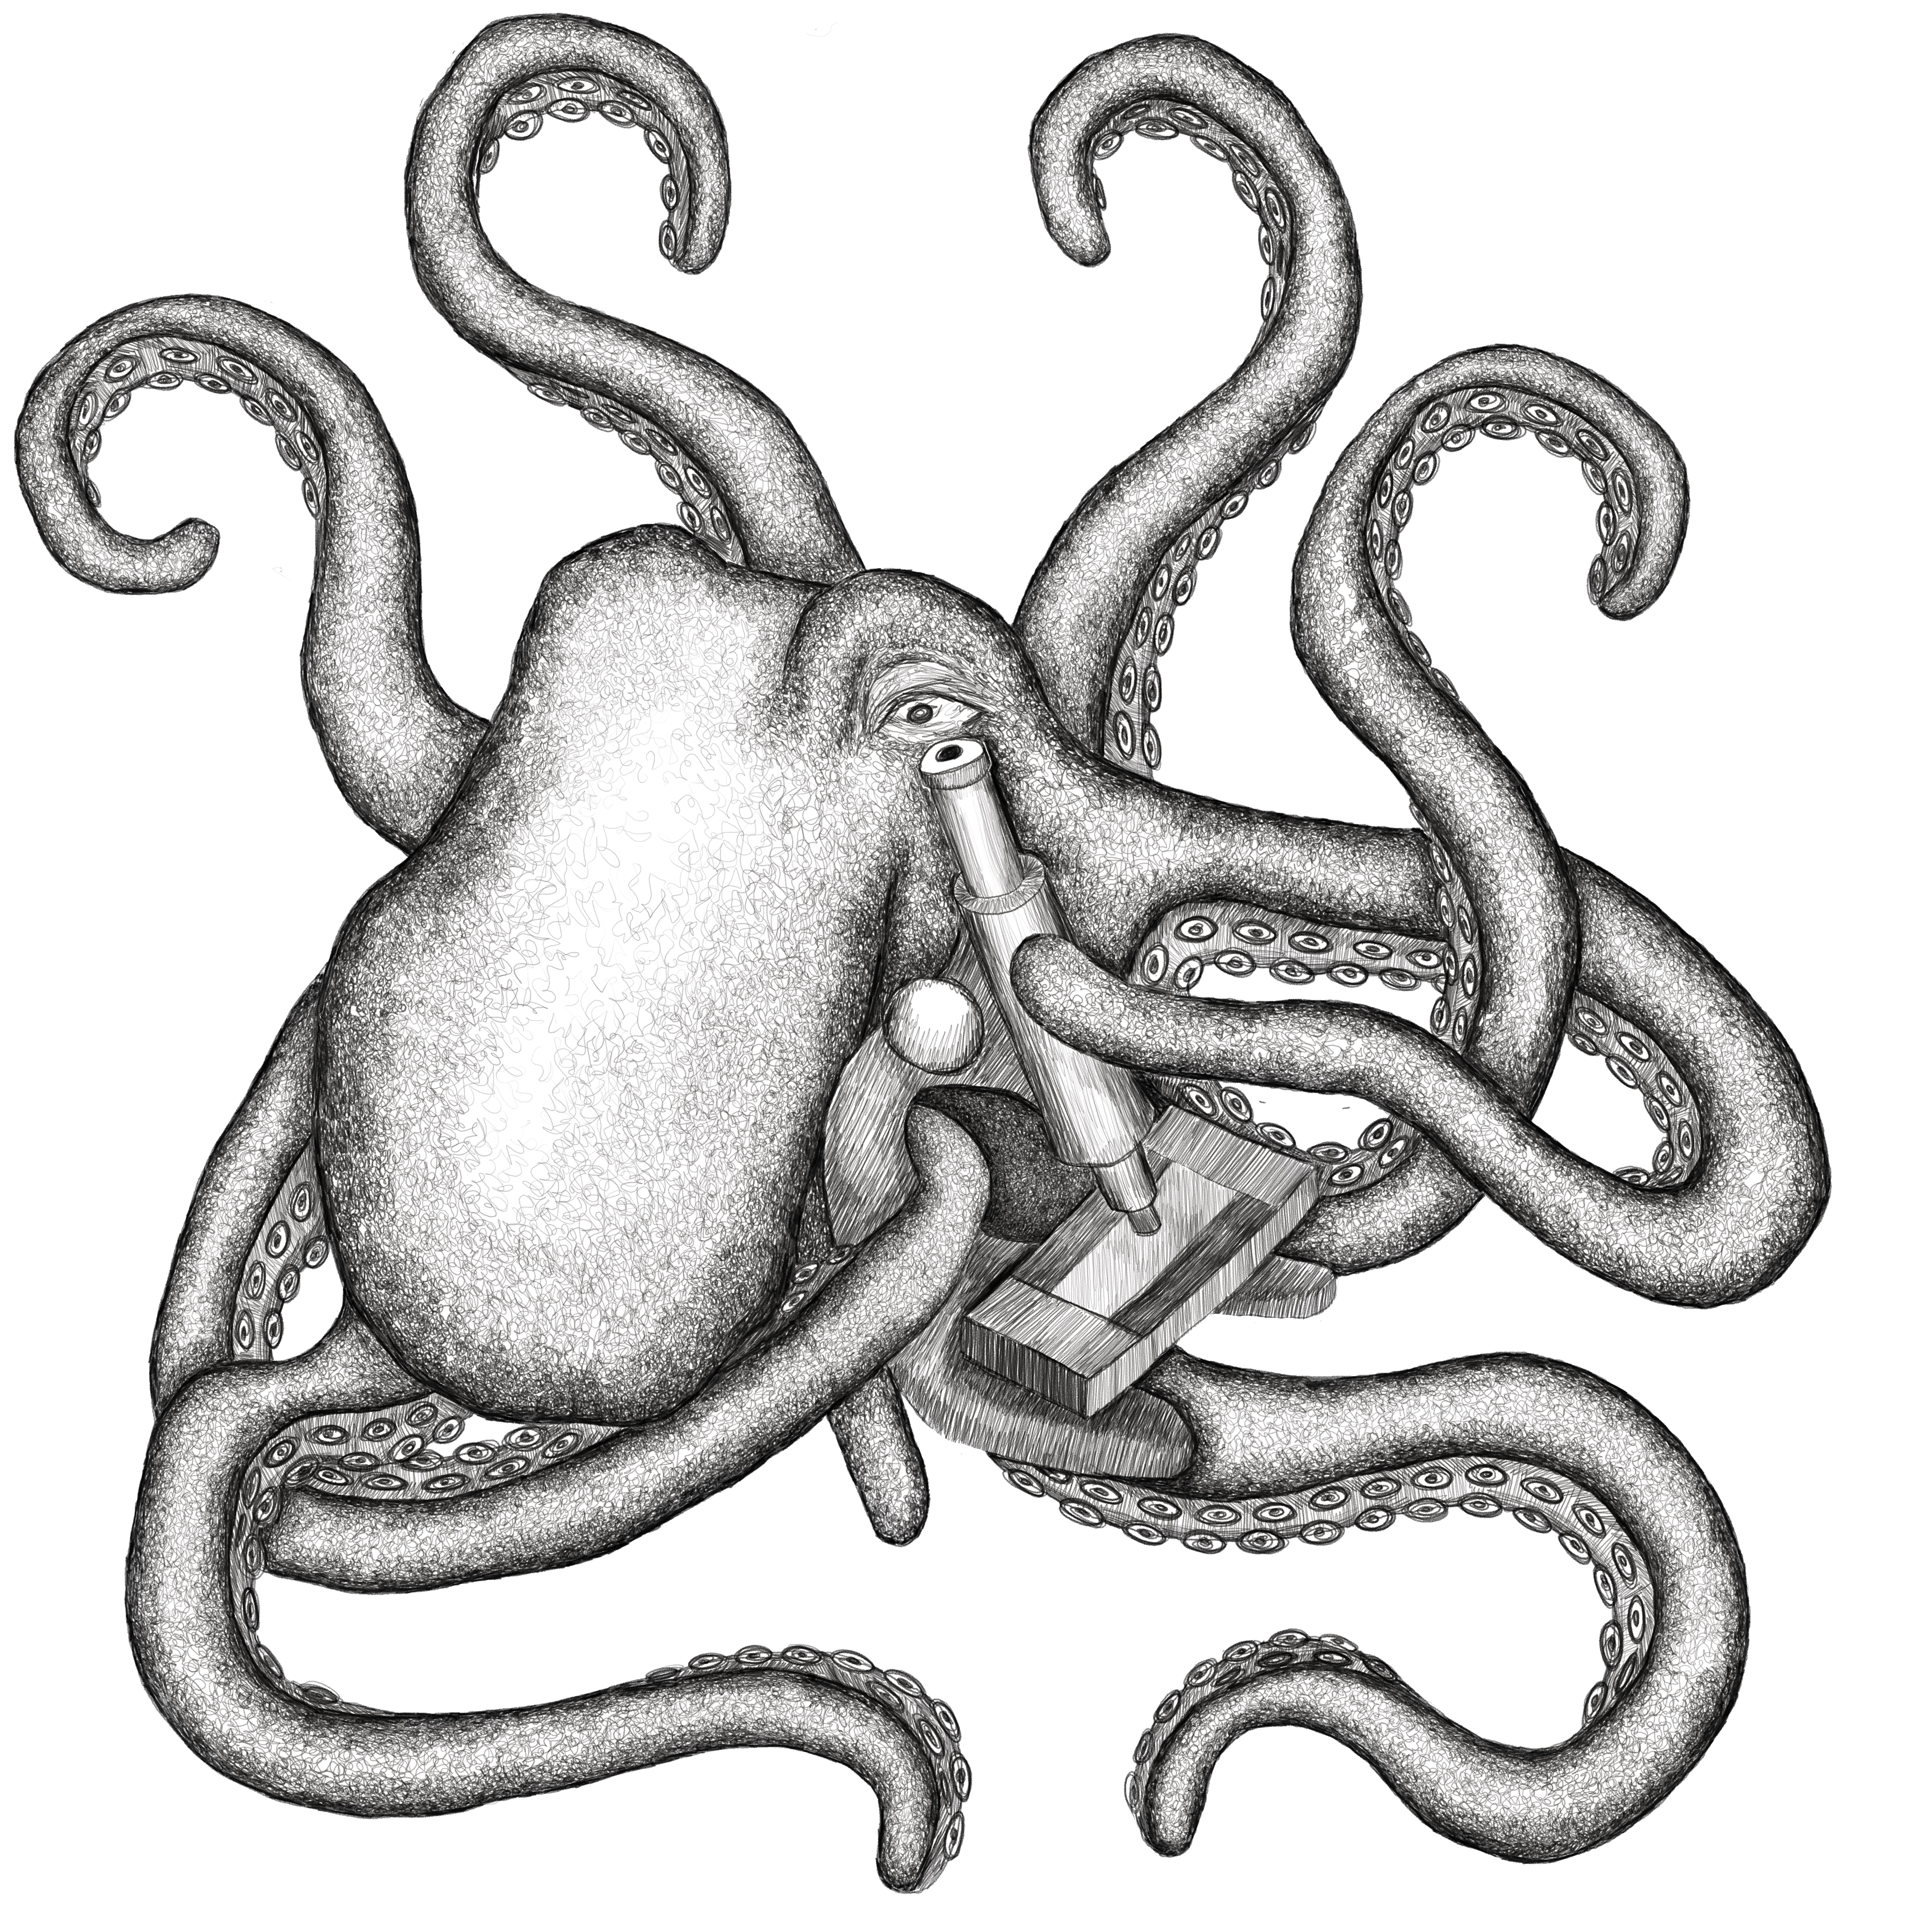 Octopus looking through microscope